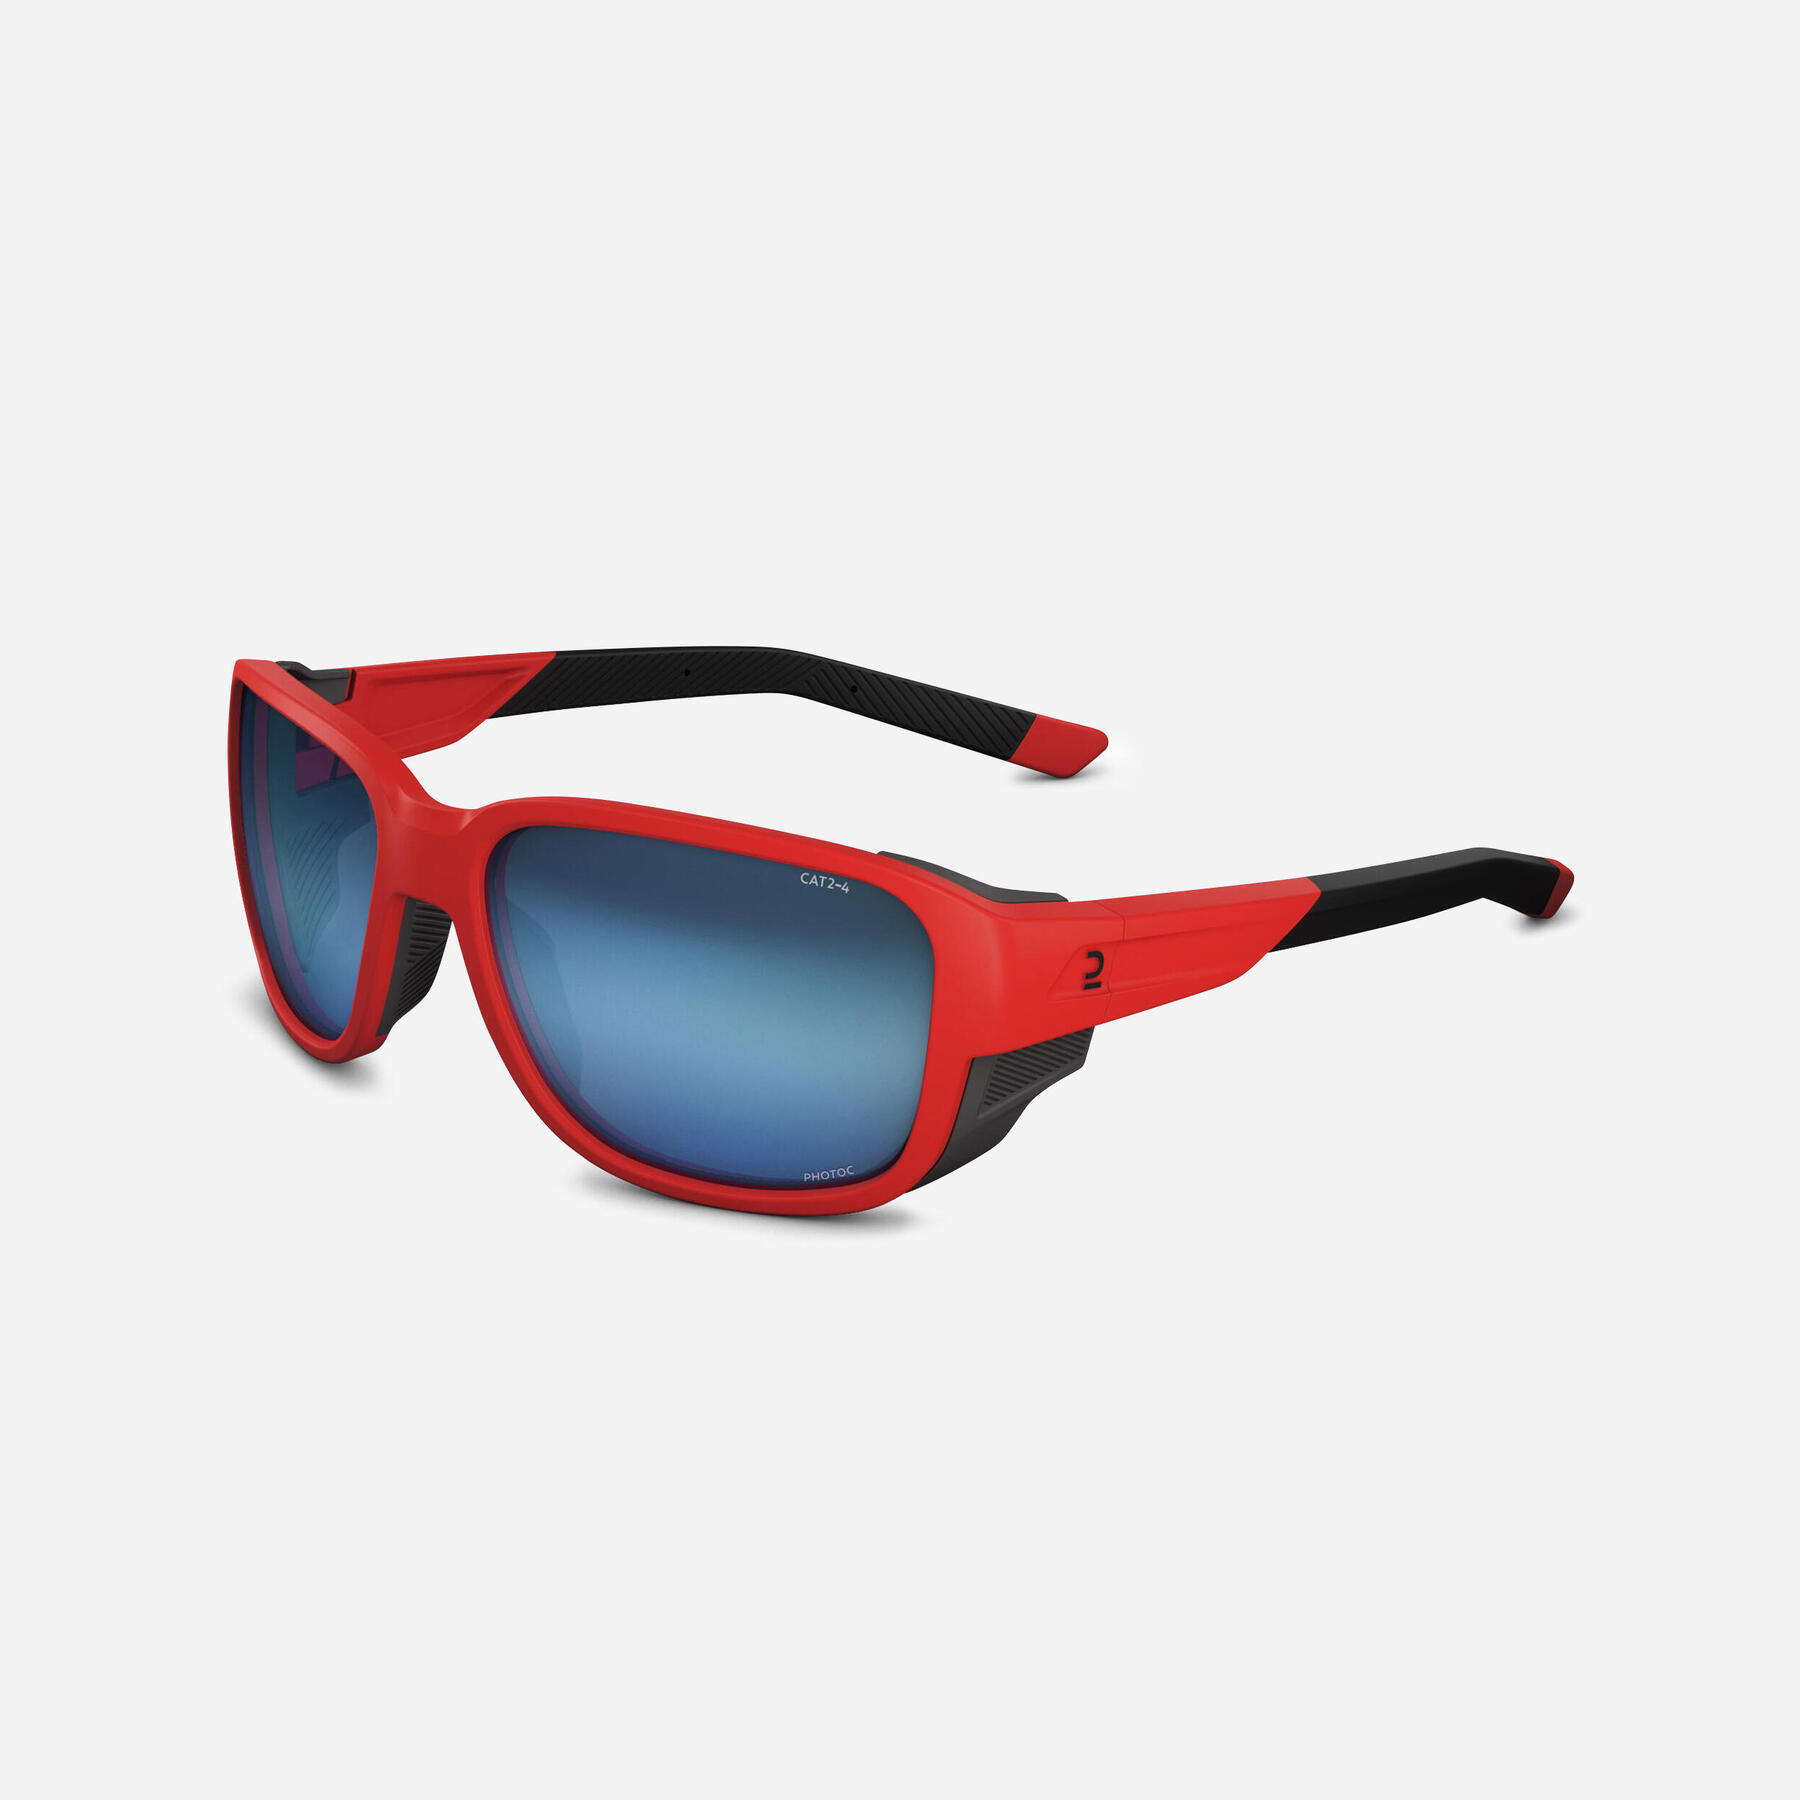 Refurbished adults Hiking Sunglasses - MH570 - Photochromic  - D Grade